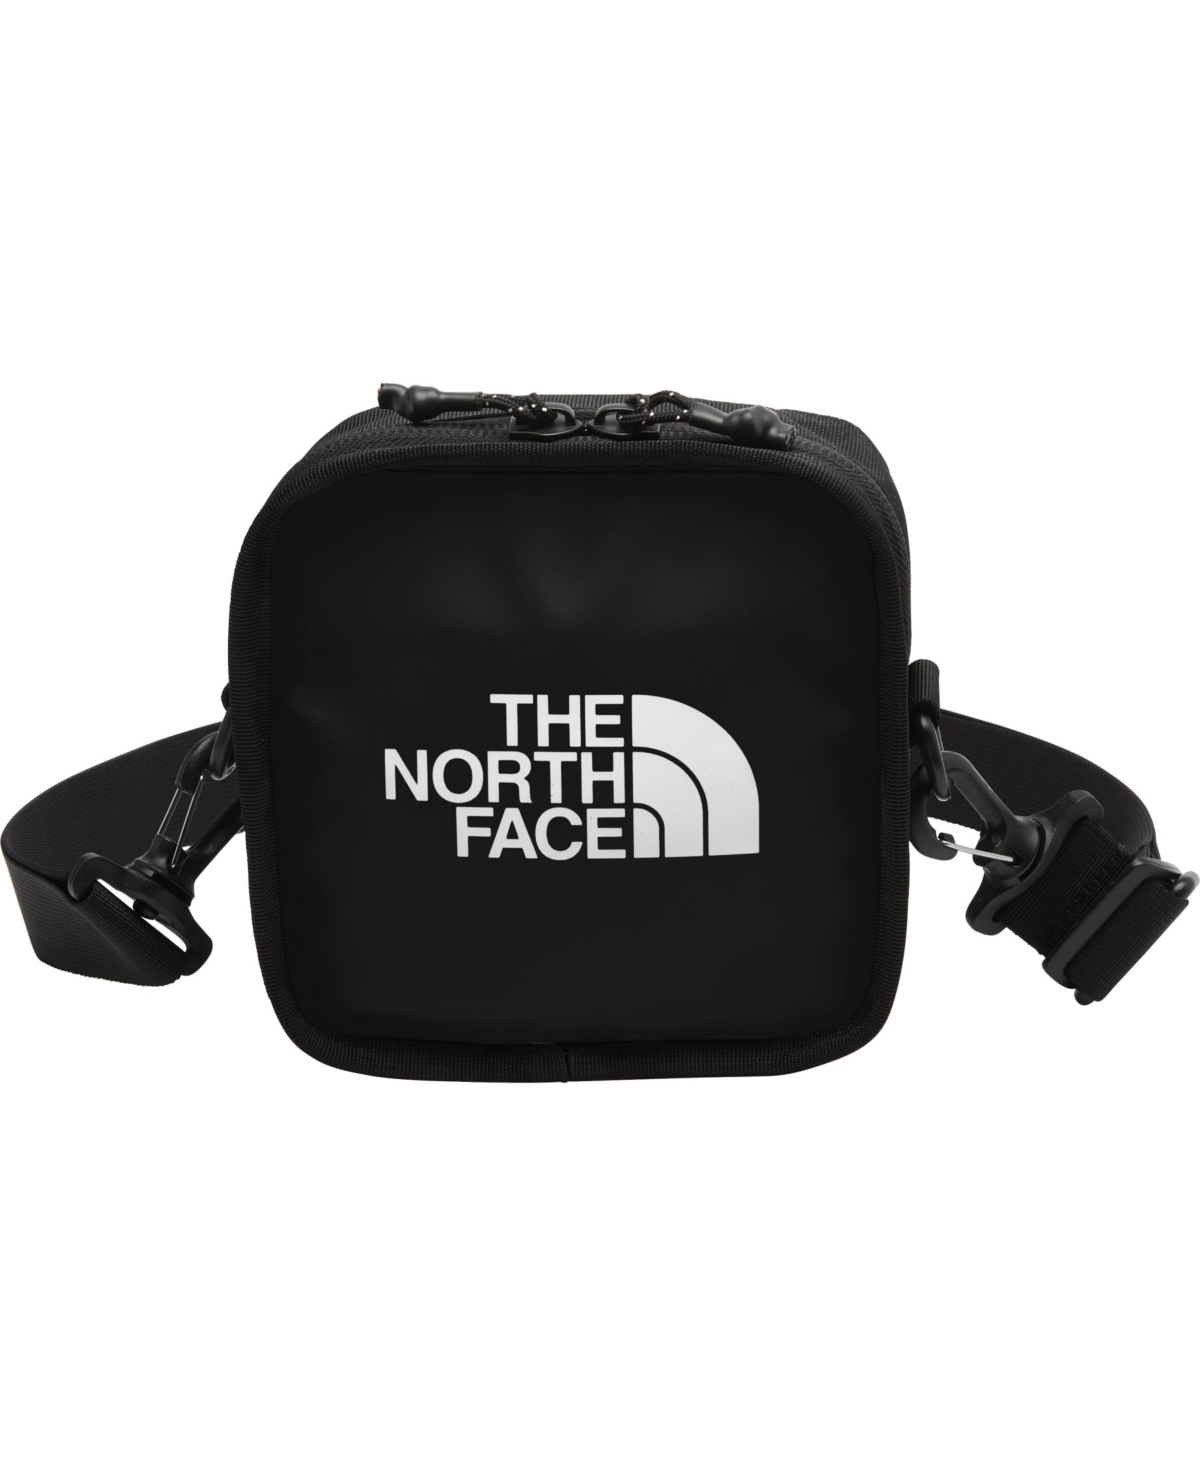 The North Face Explore Bardu II Crossbody Bag (Black/White) $20 + Free Shipping